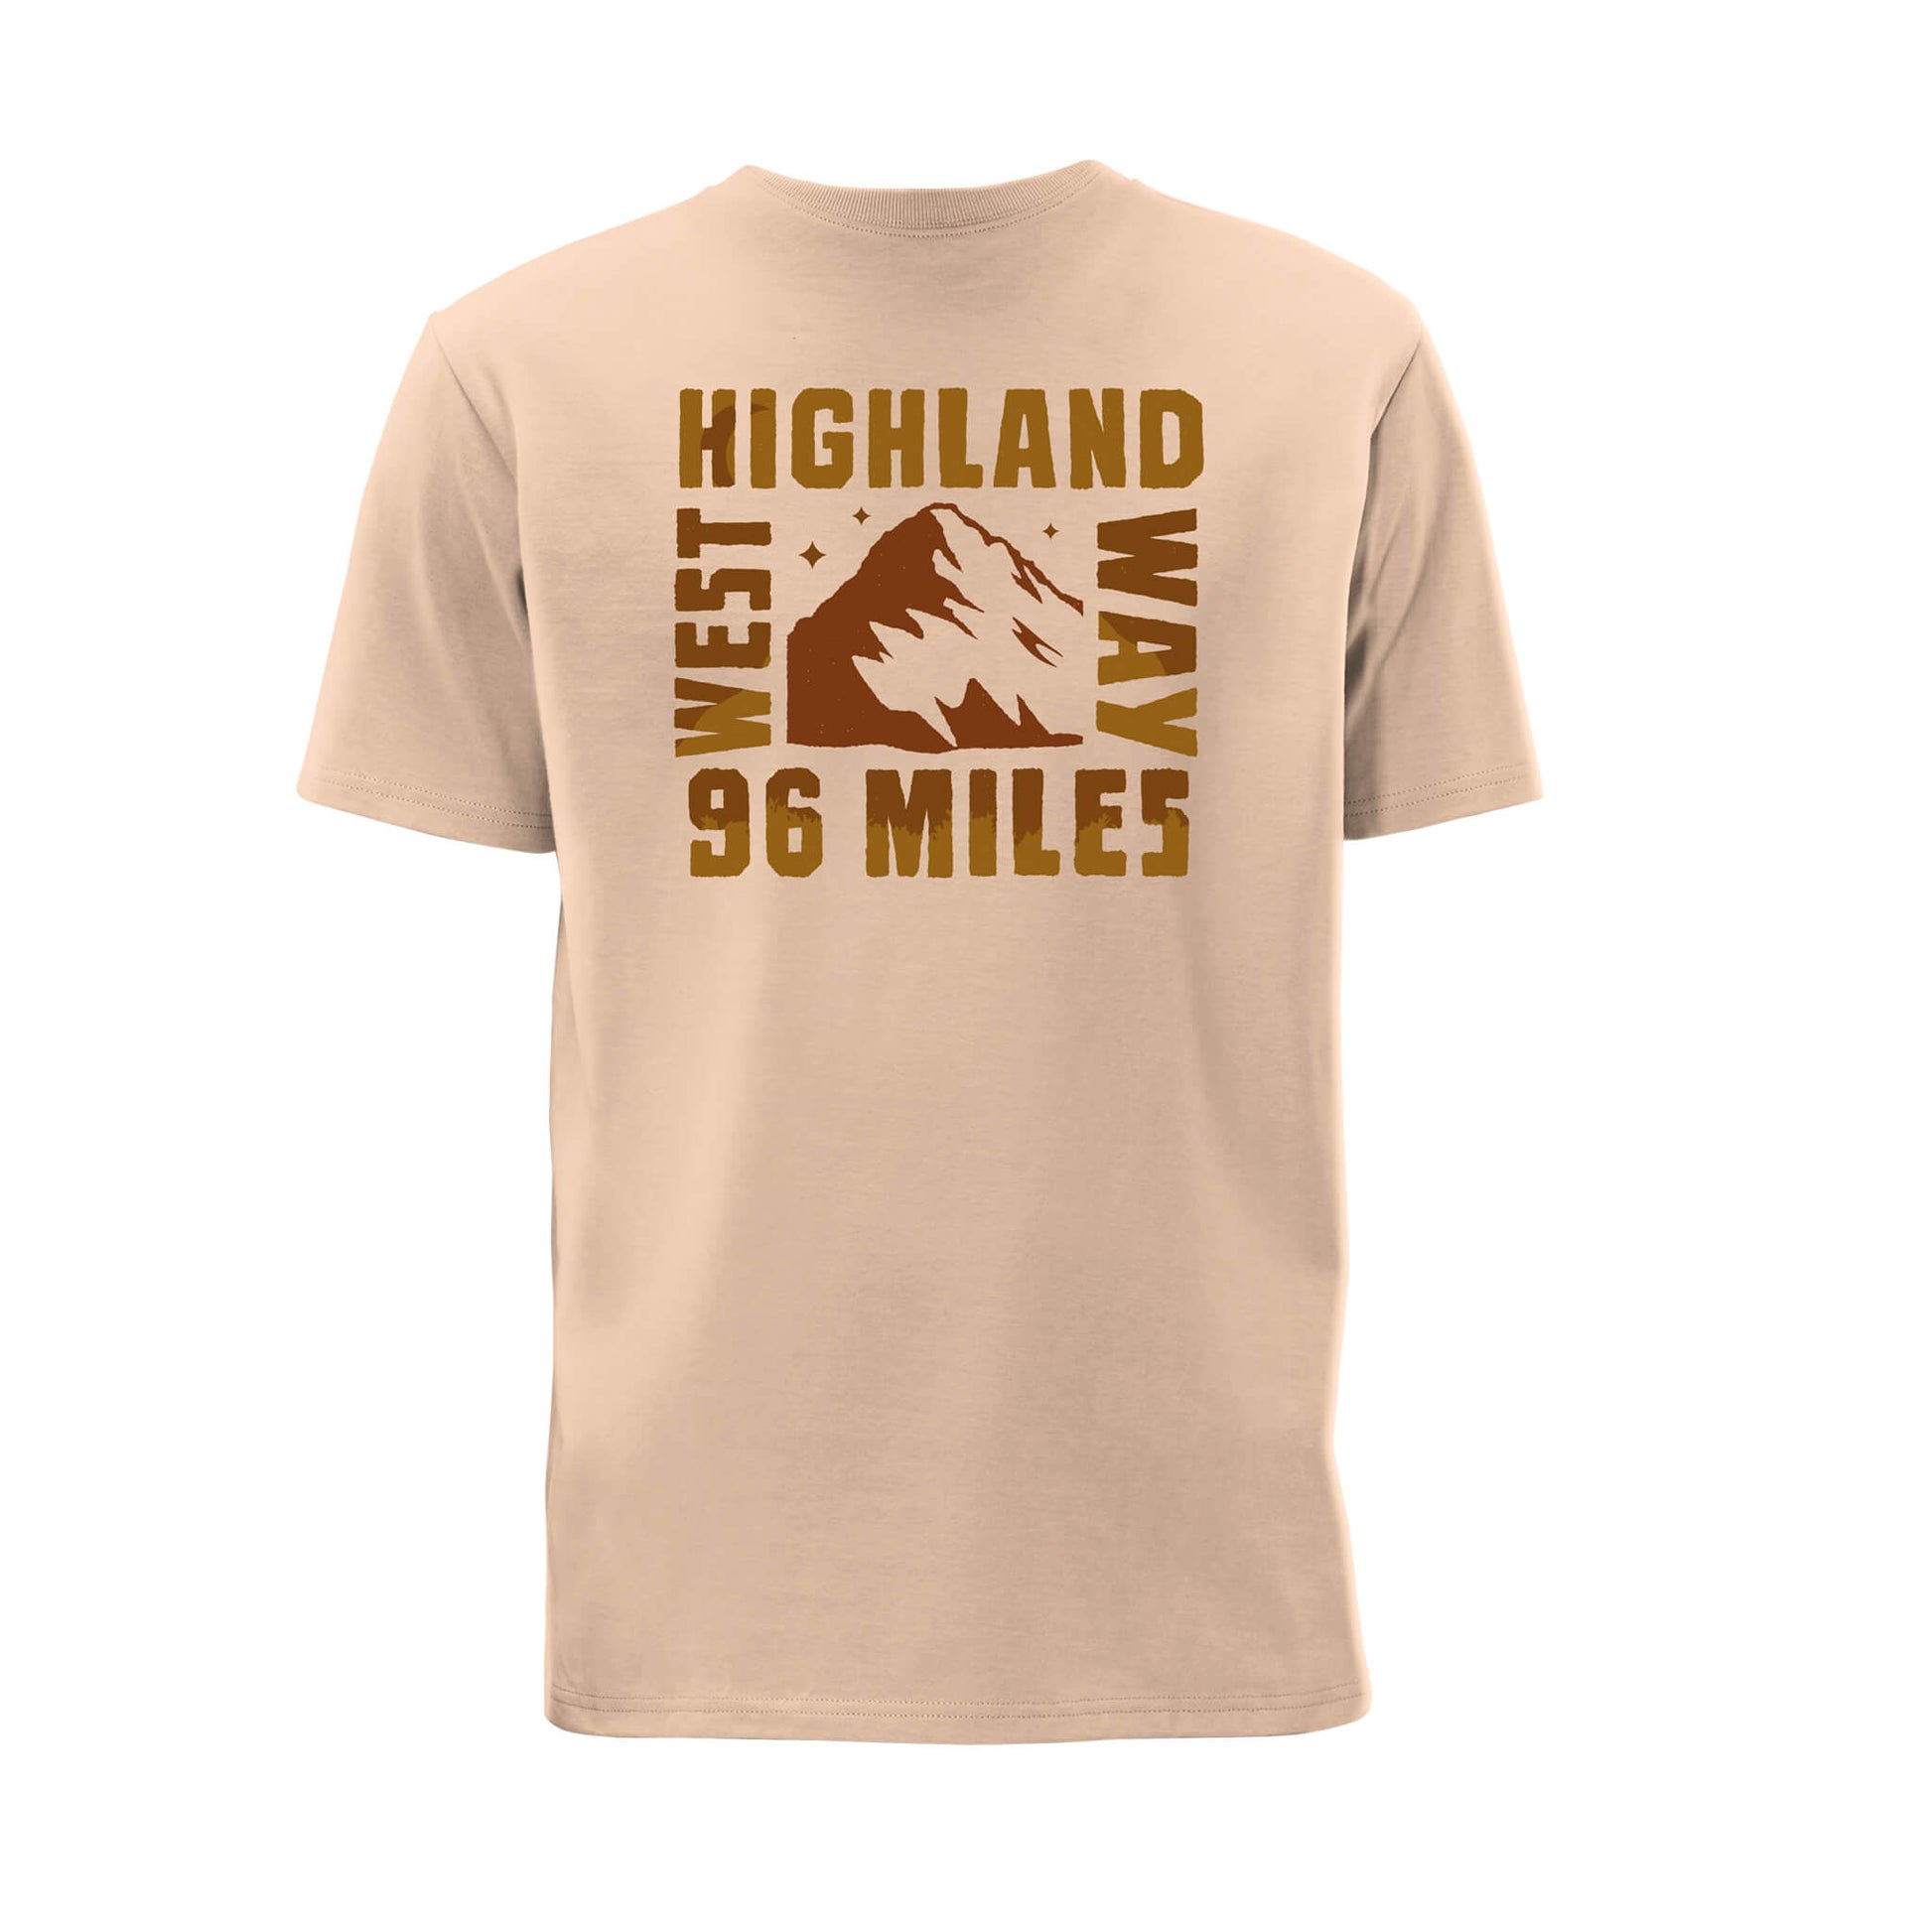 Mountain Organic Cotton T-Shirt - Desert Sand - Back View - West Highland Way